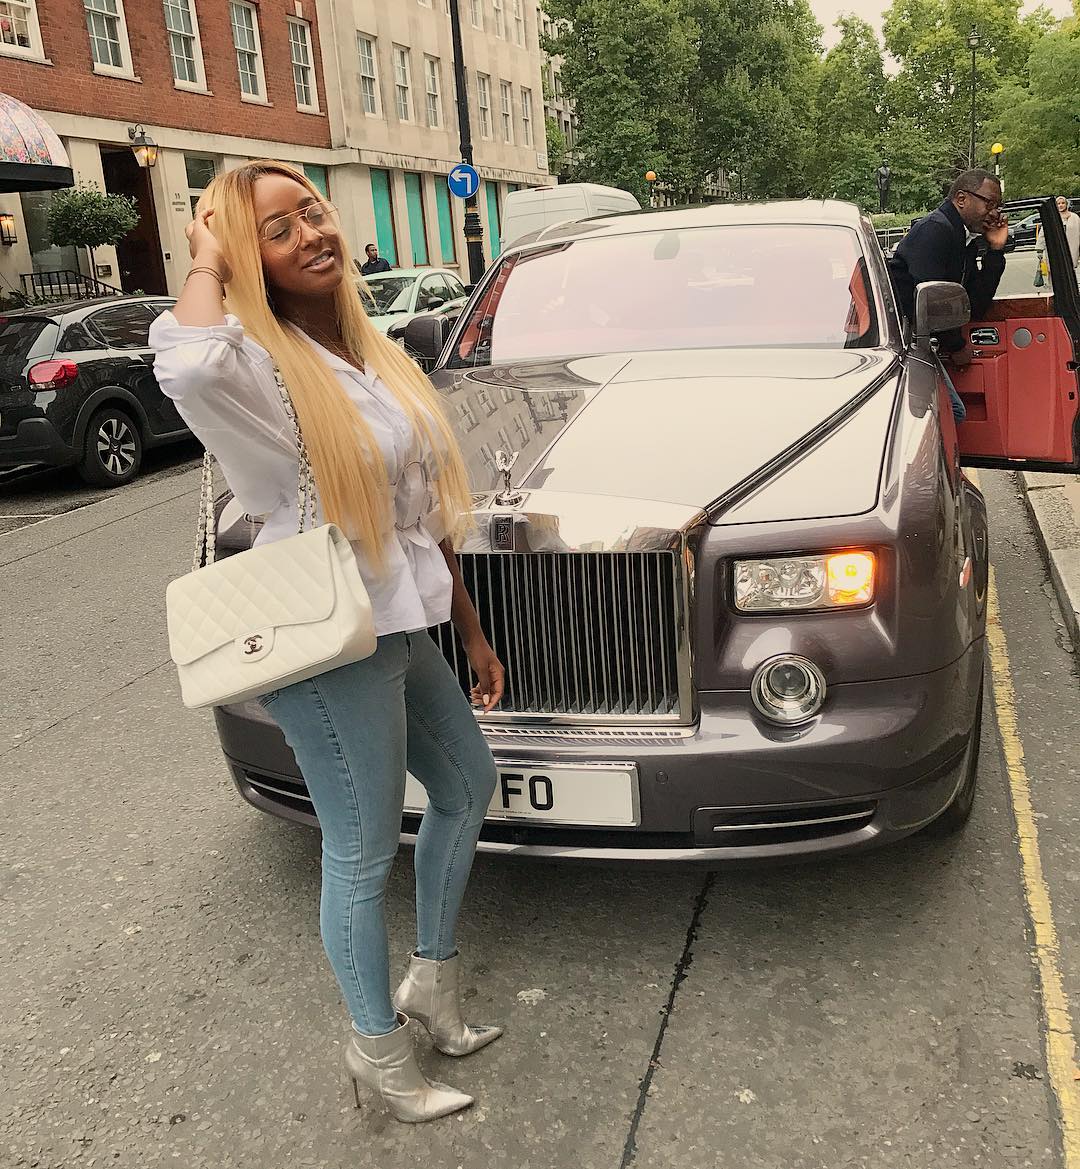 DJ Cuppy Flaunts Customized Rolls Royce